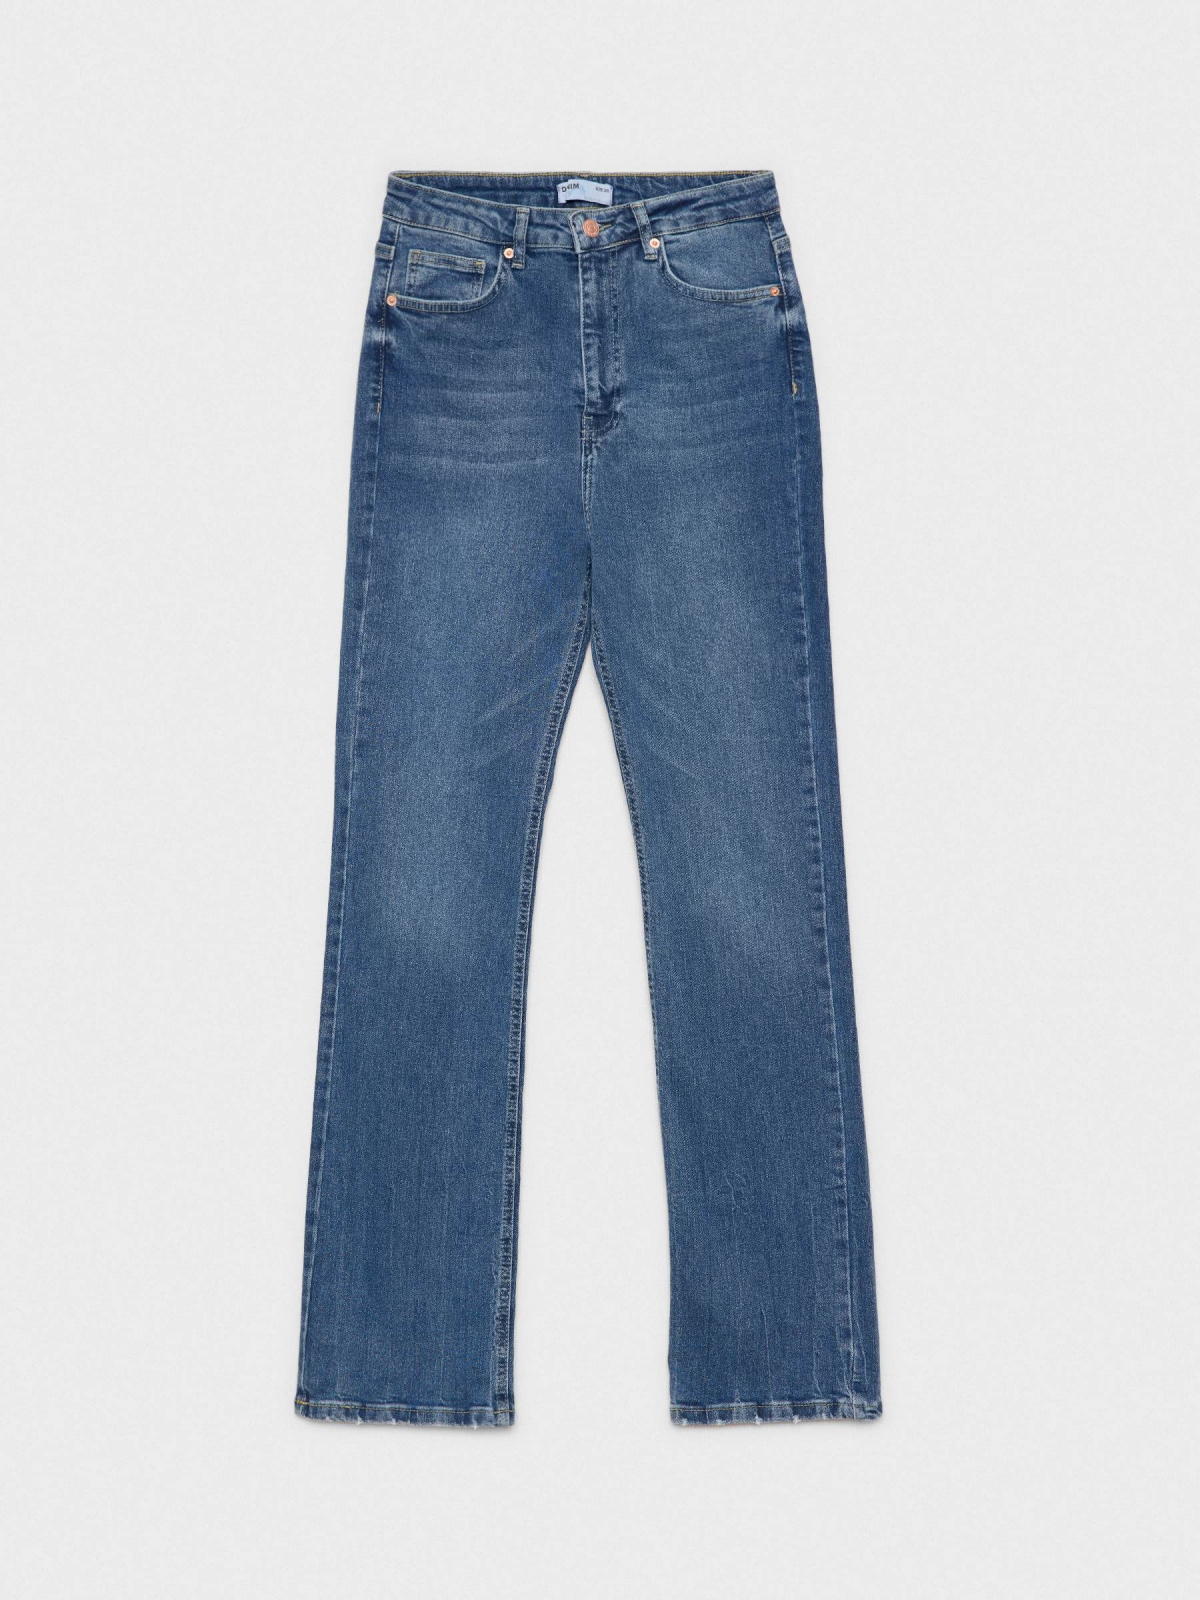  High waist straight slim jeans blue